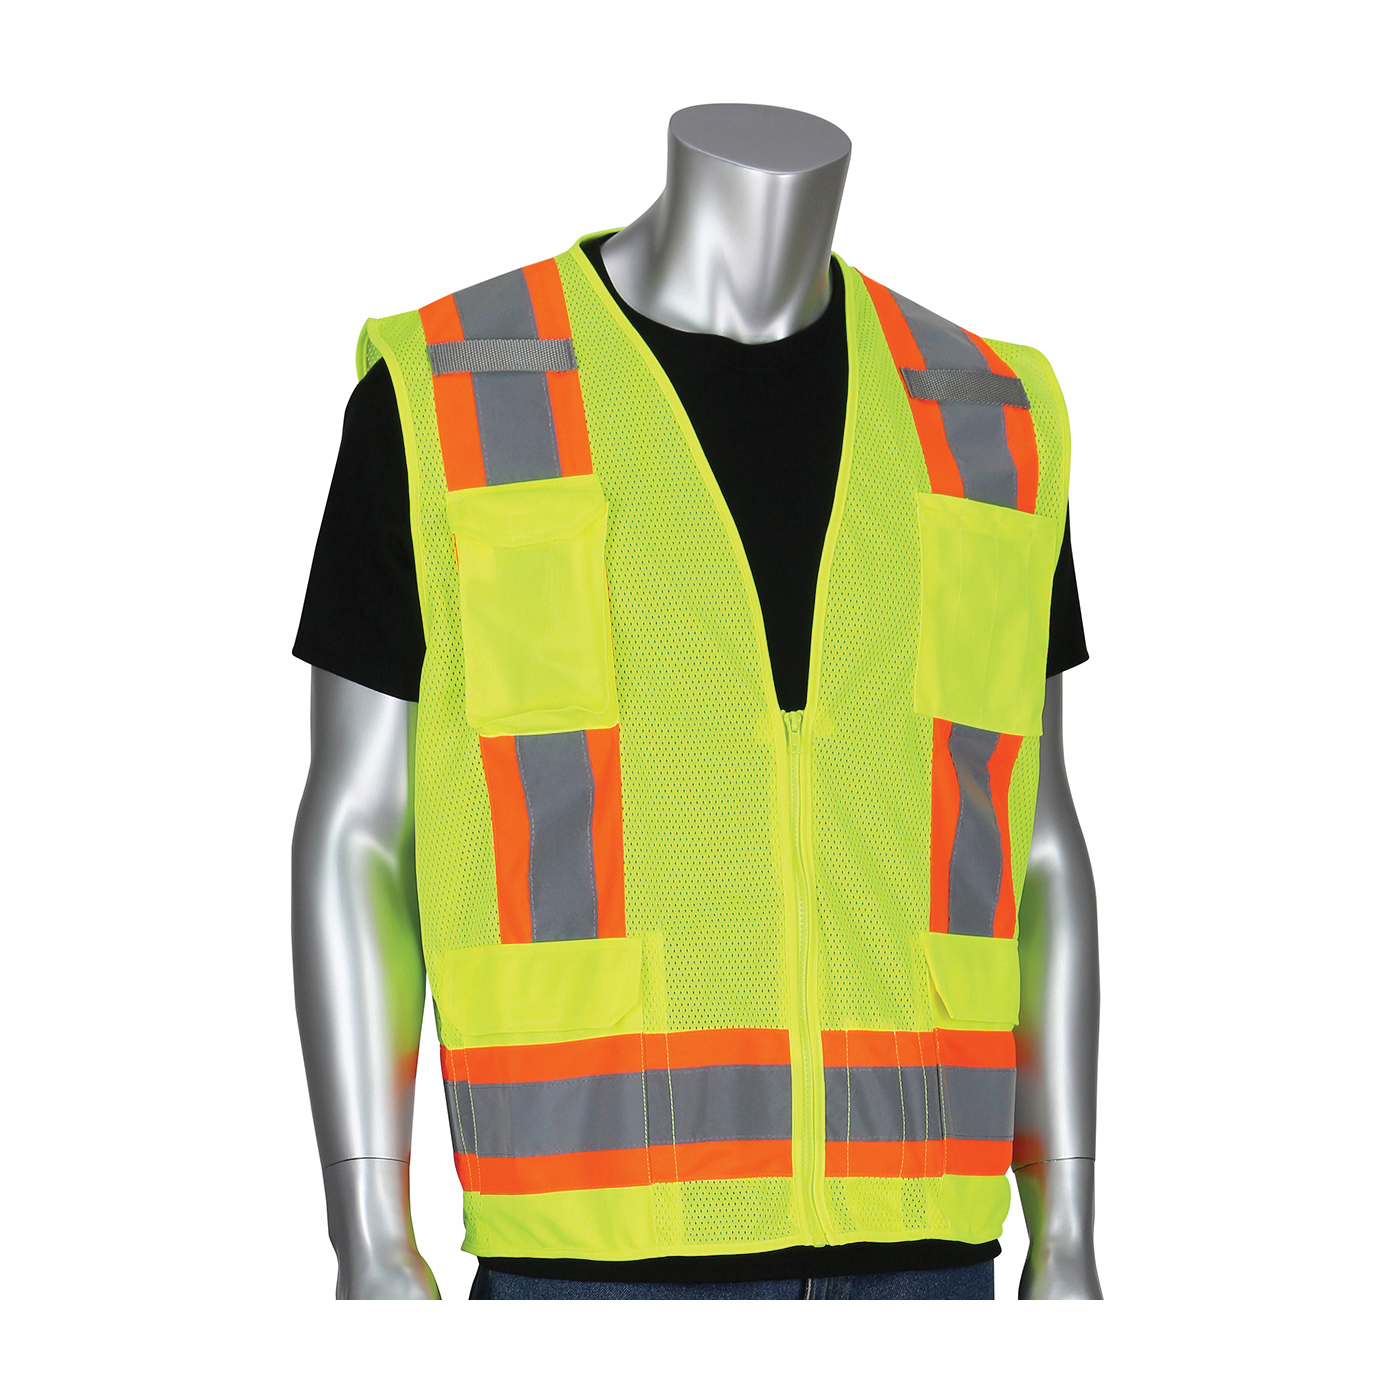 PIP® 302-0500M-LY/XL 2-Tone Surveyor Safety Vest, XL, Hi-Viz Lime Yellow, Polyester, Zipper Closure, 11 Pockets, ANSI Class: Class 2, Specifications Met: ANSI 107 Type R